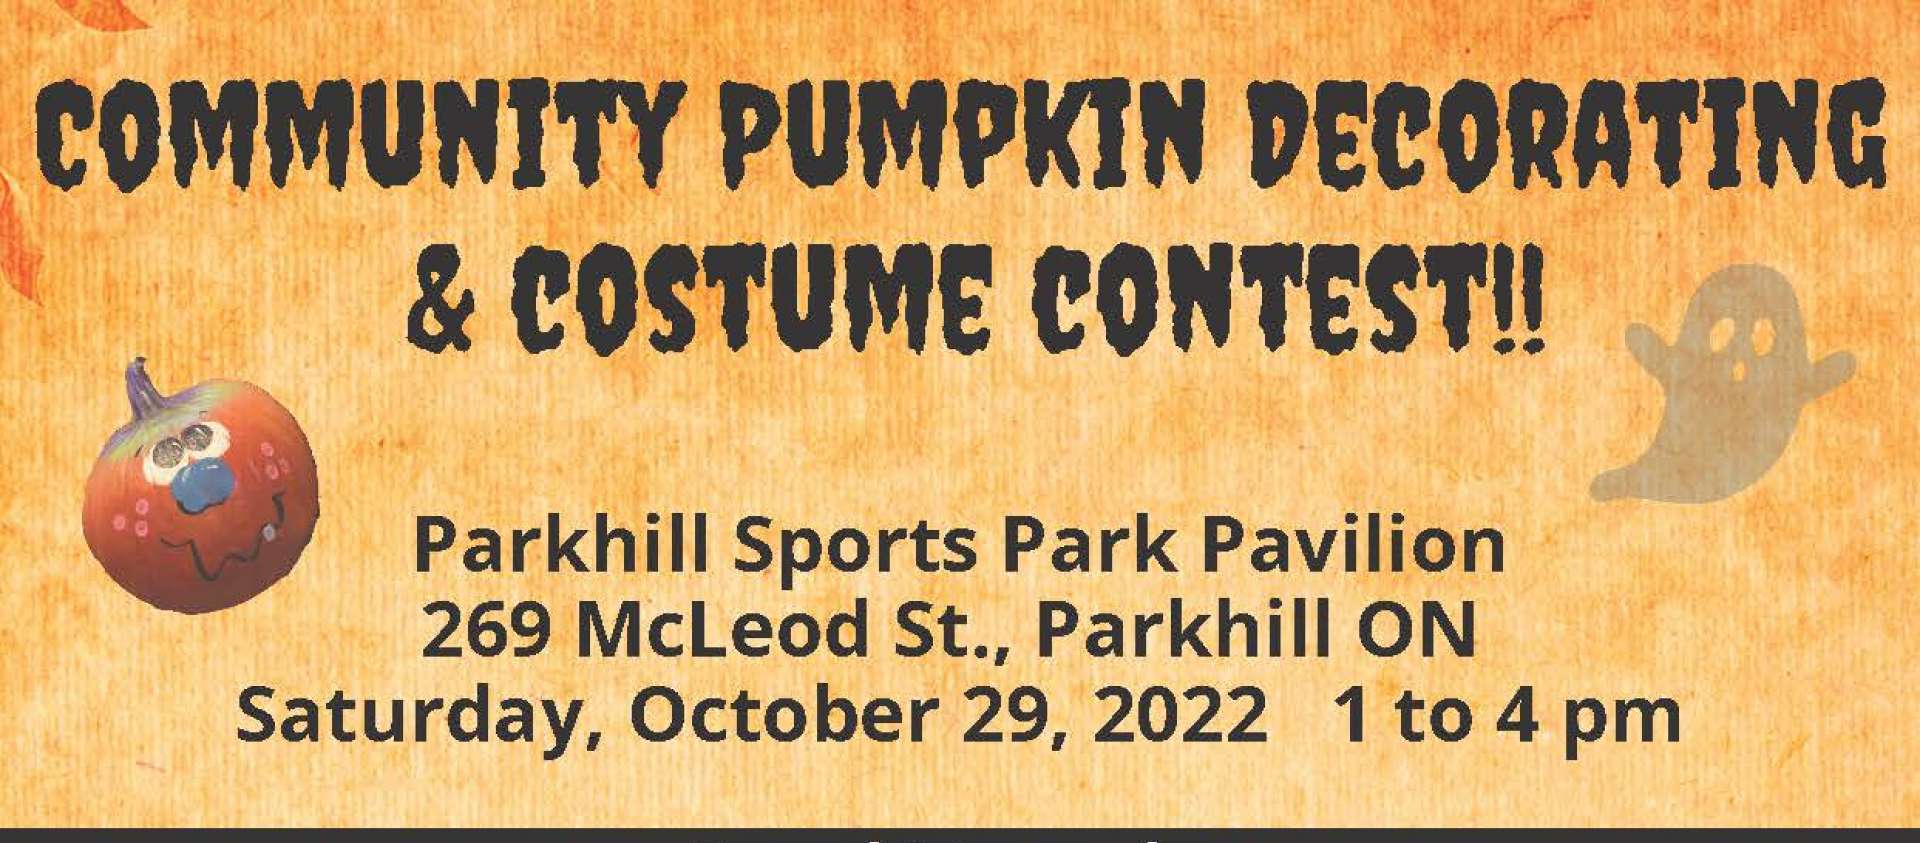 Community Pumpkin Decorating & Costume Contest